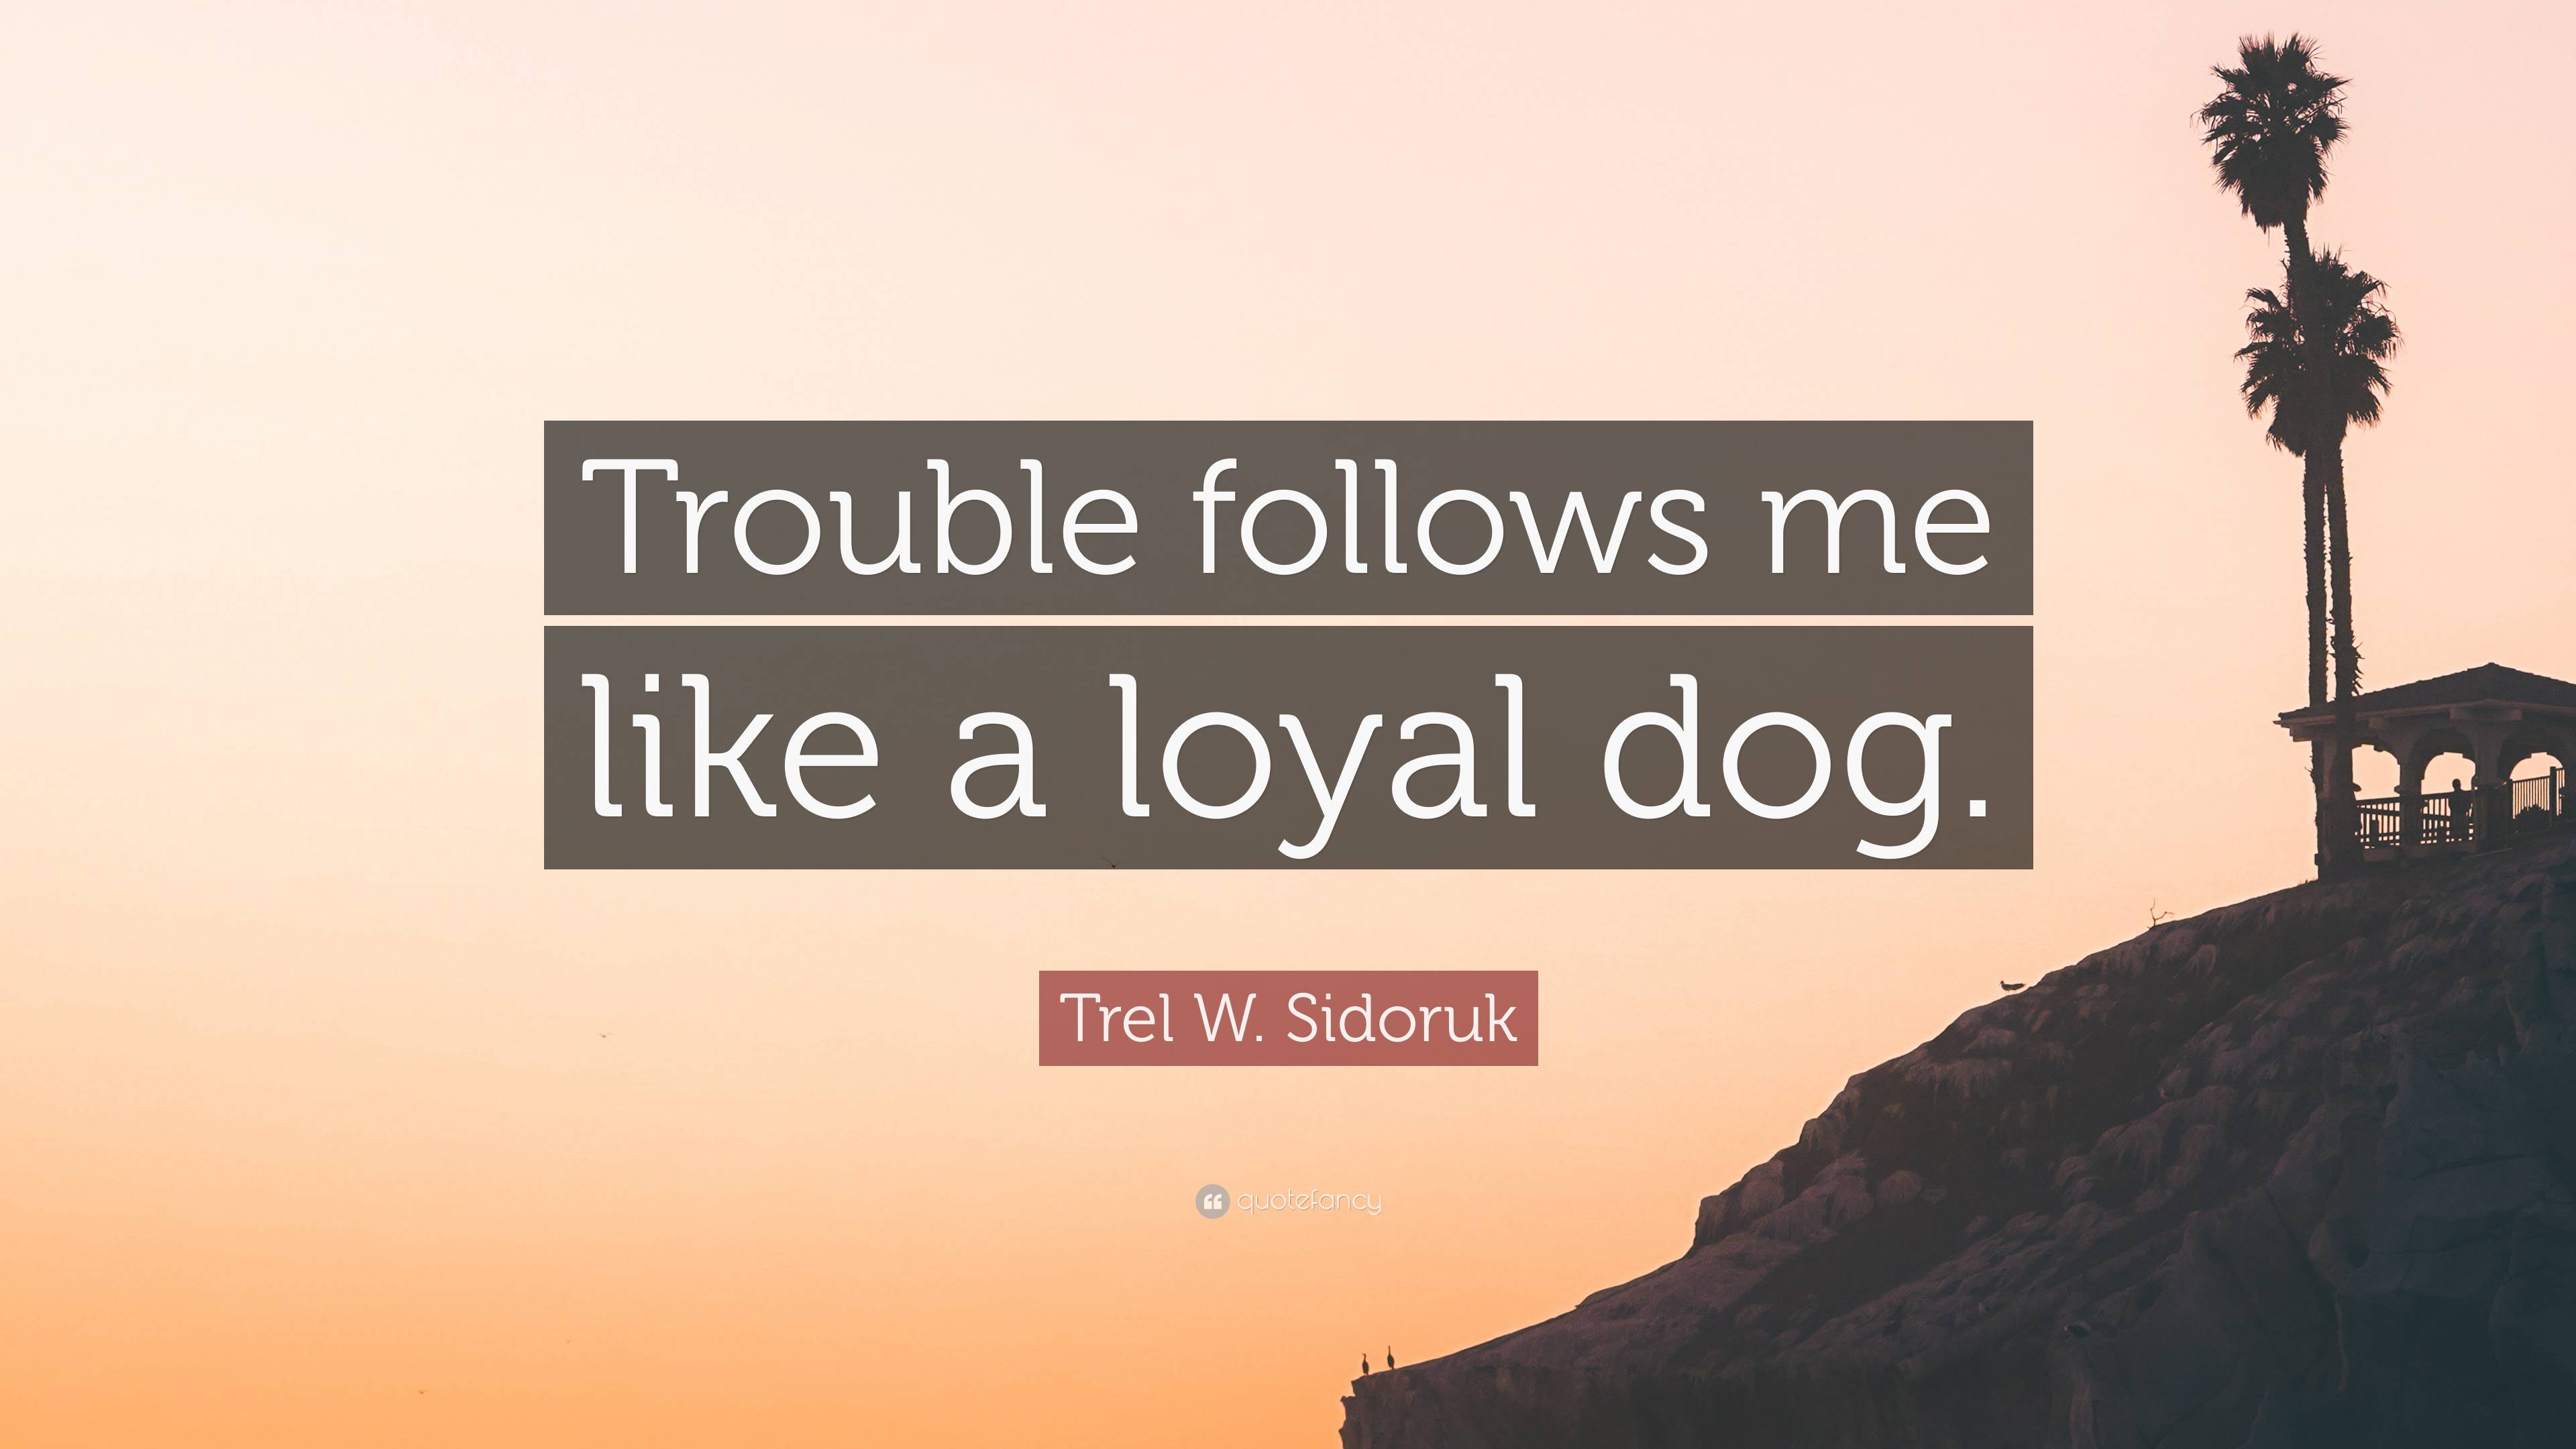 Trel W. Sidoruk Quote: “Trouble follows me like a loyal dog.”